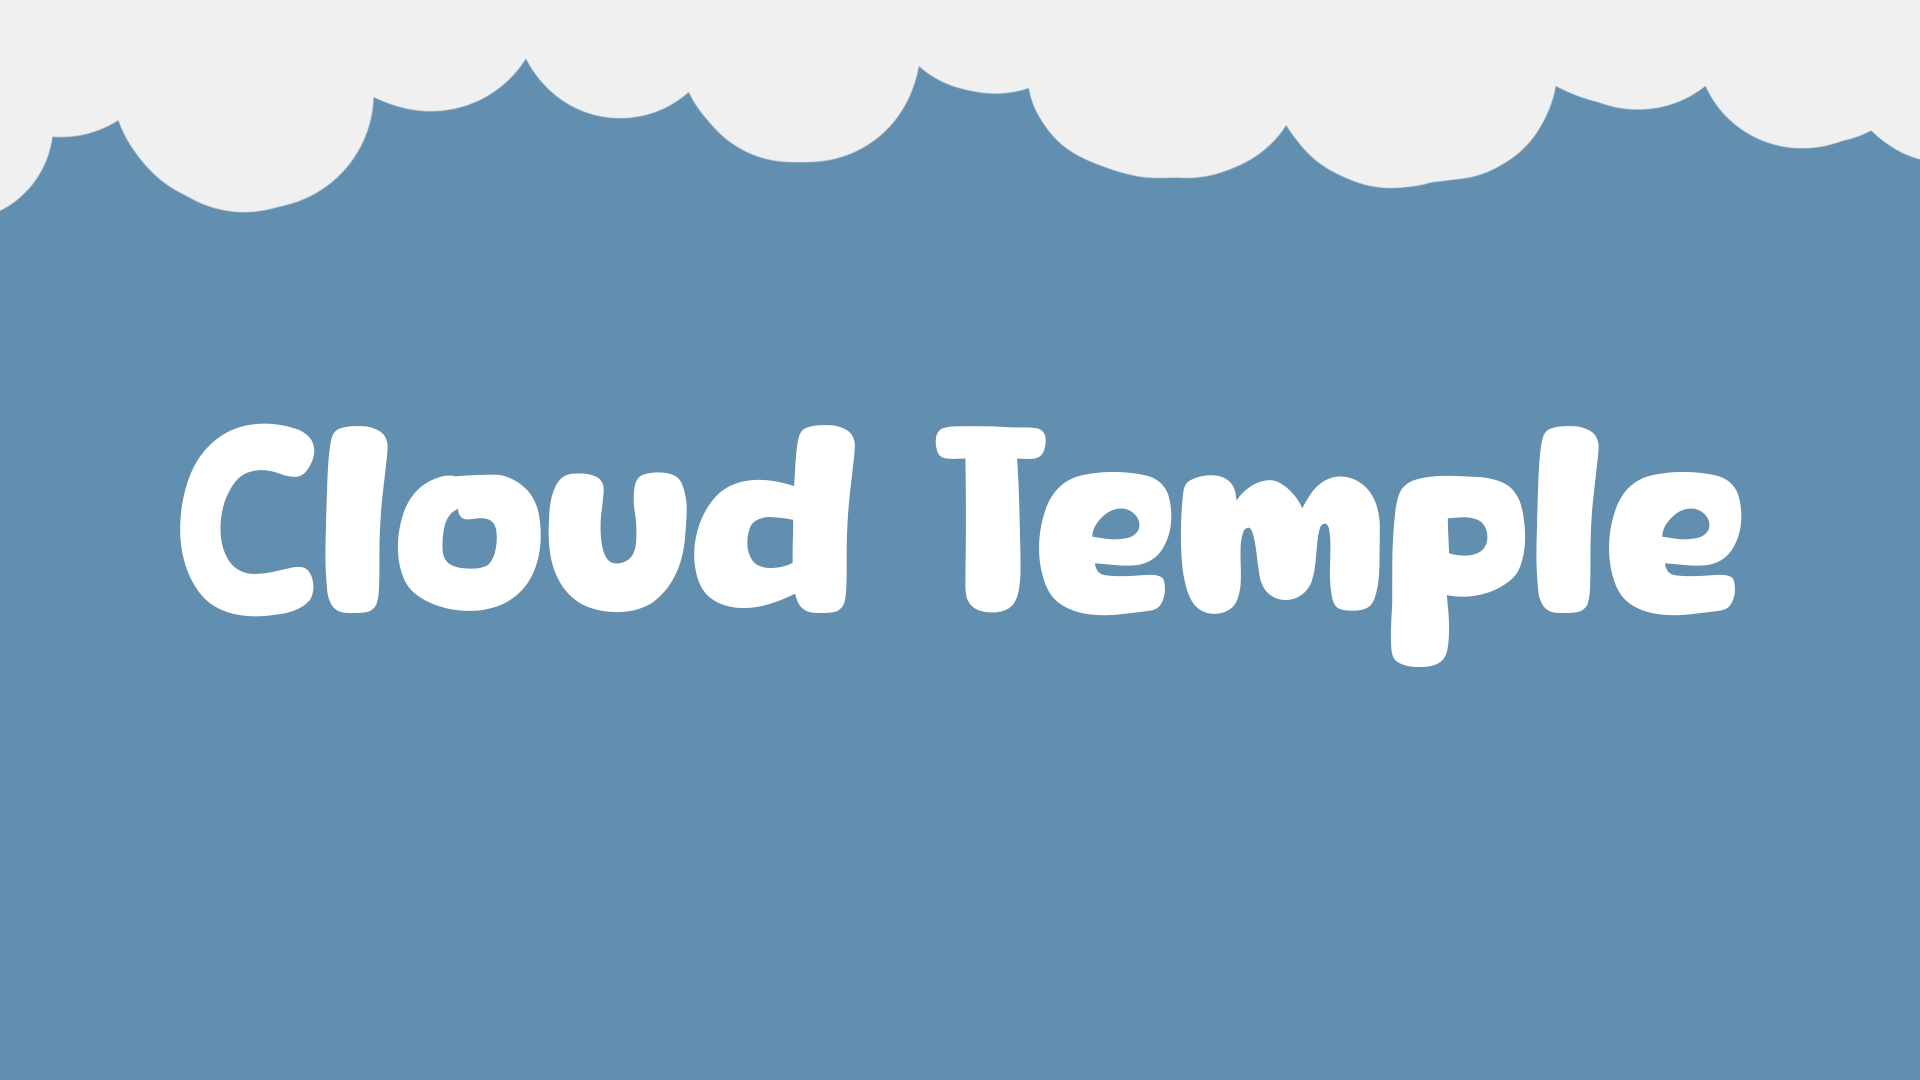 Cloud Temple